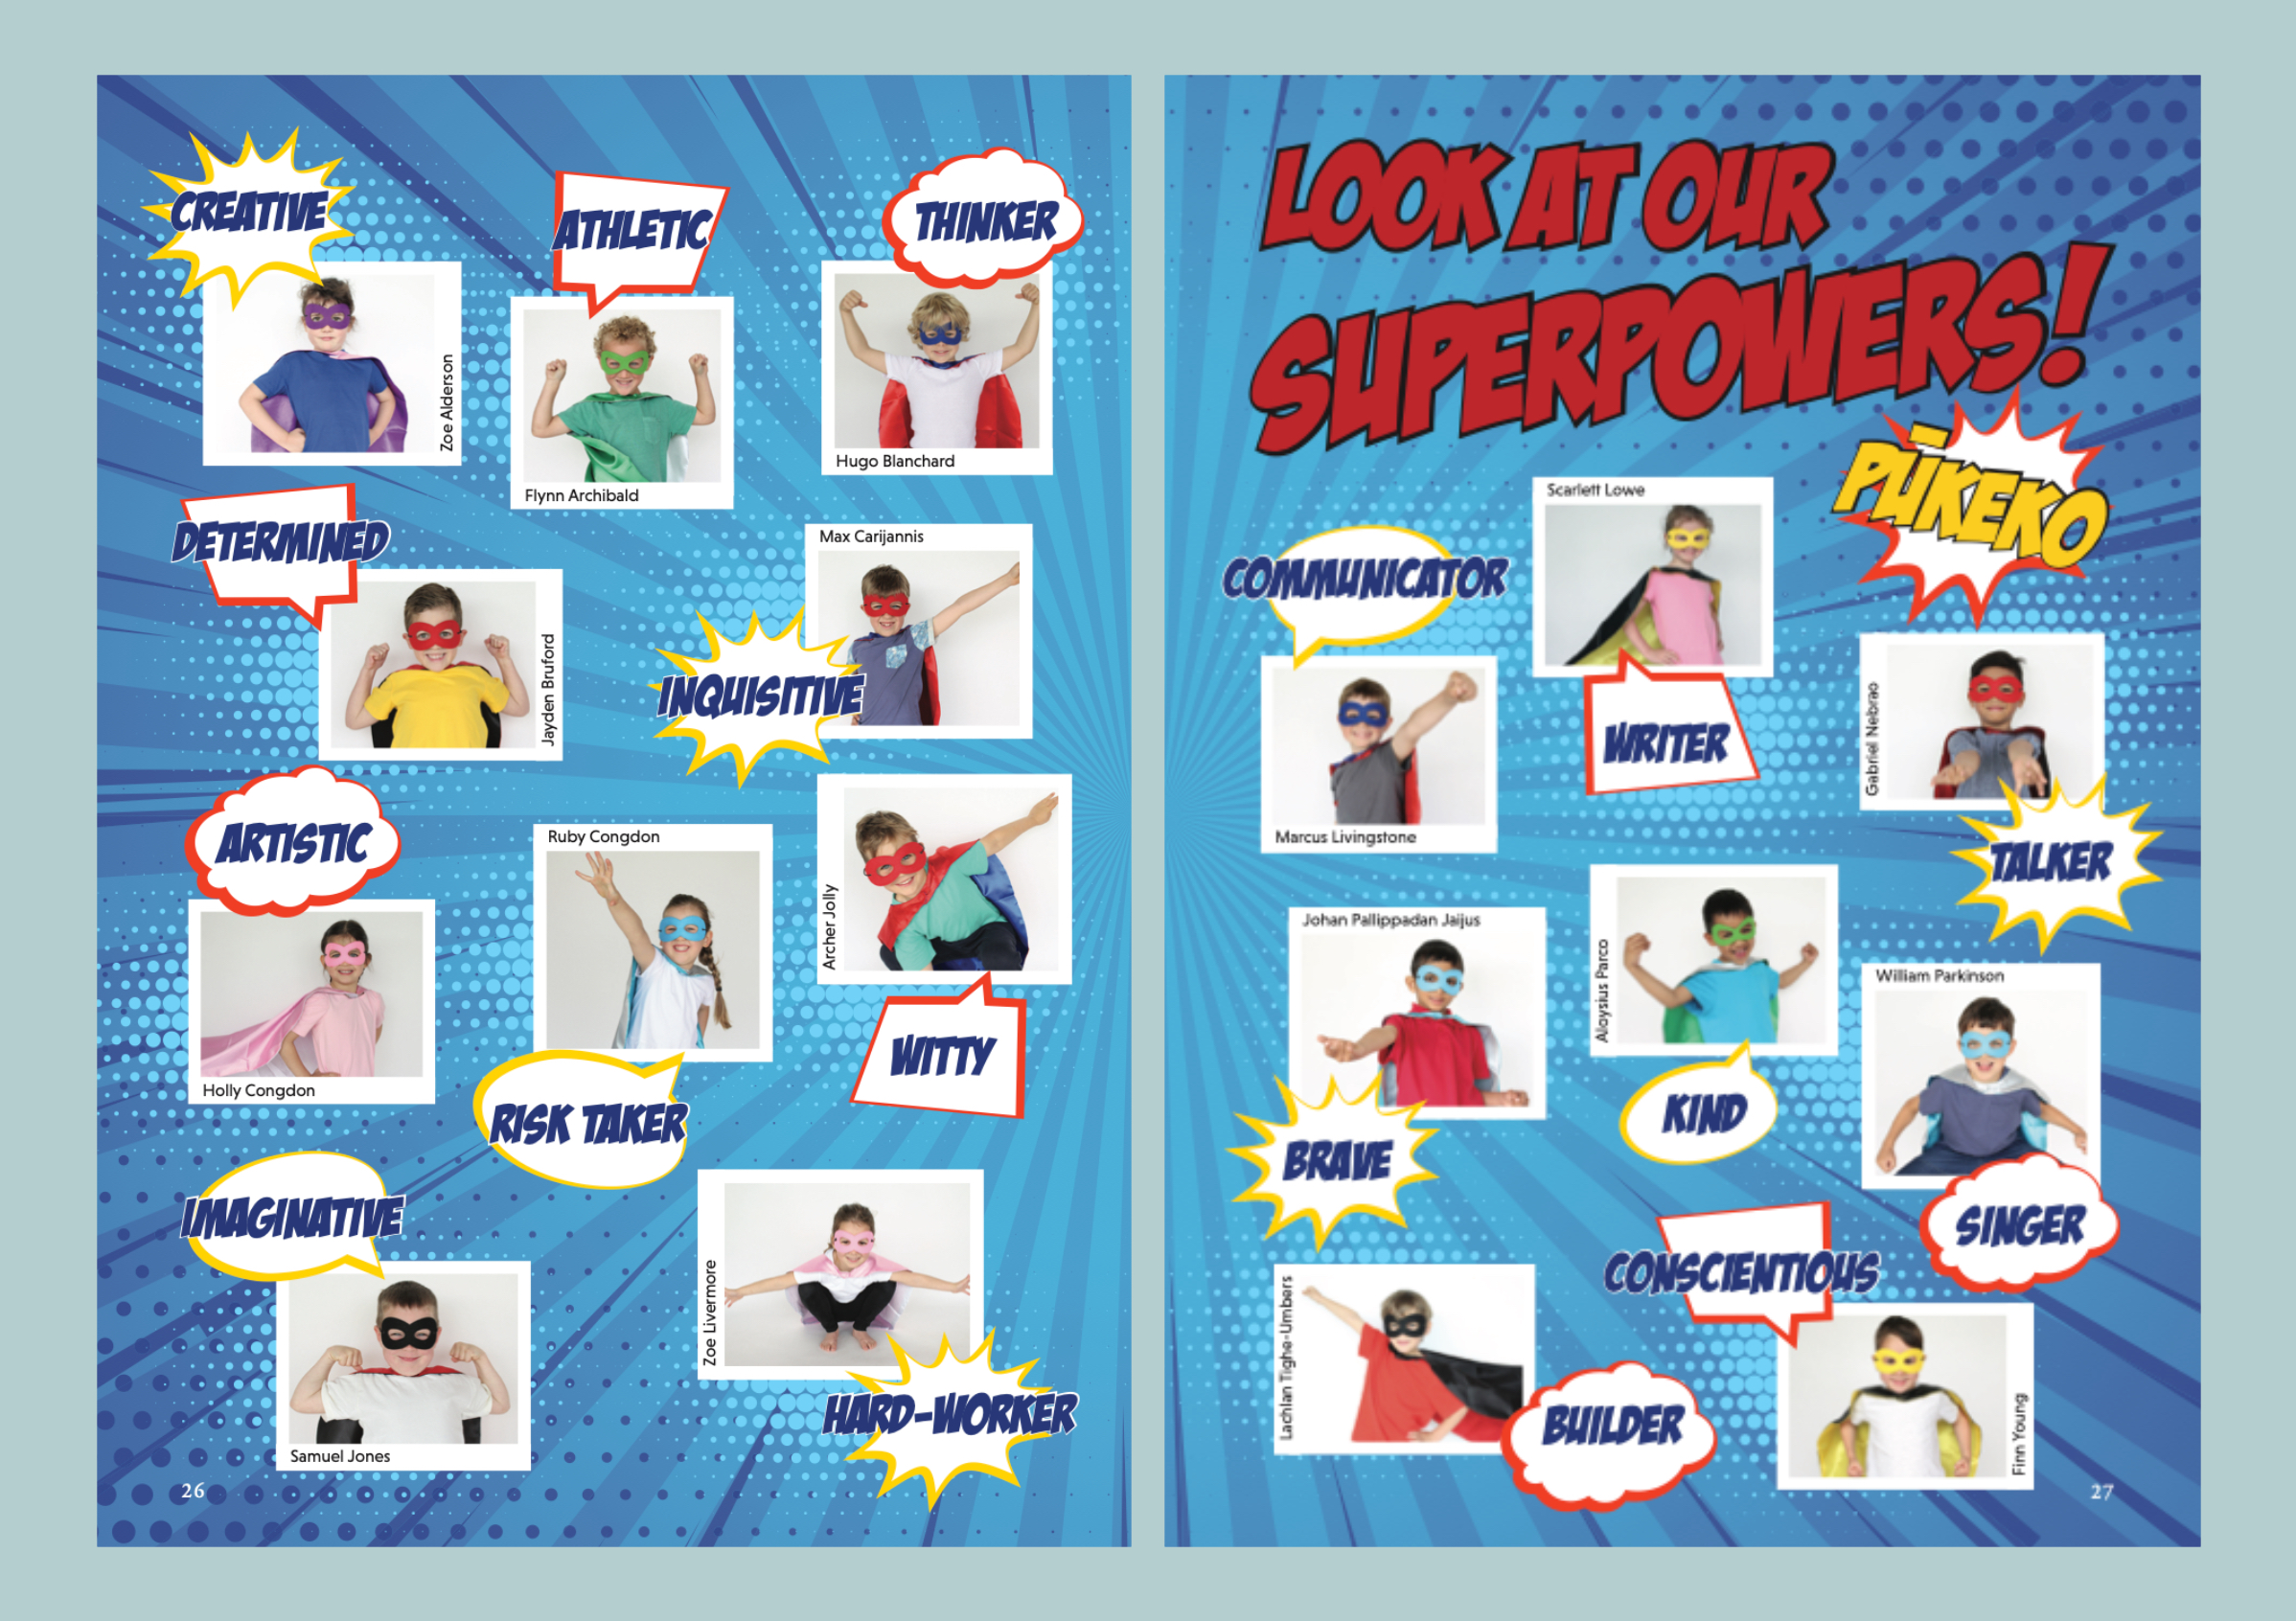 Superpower superhero class photos